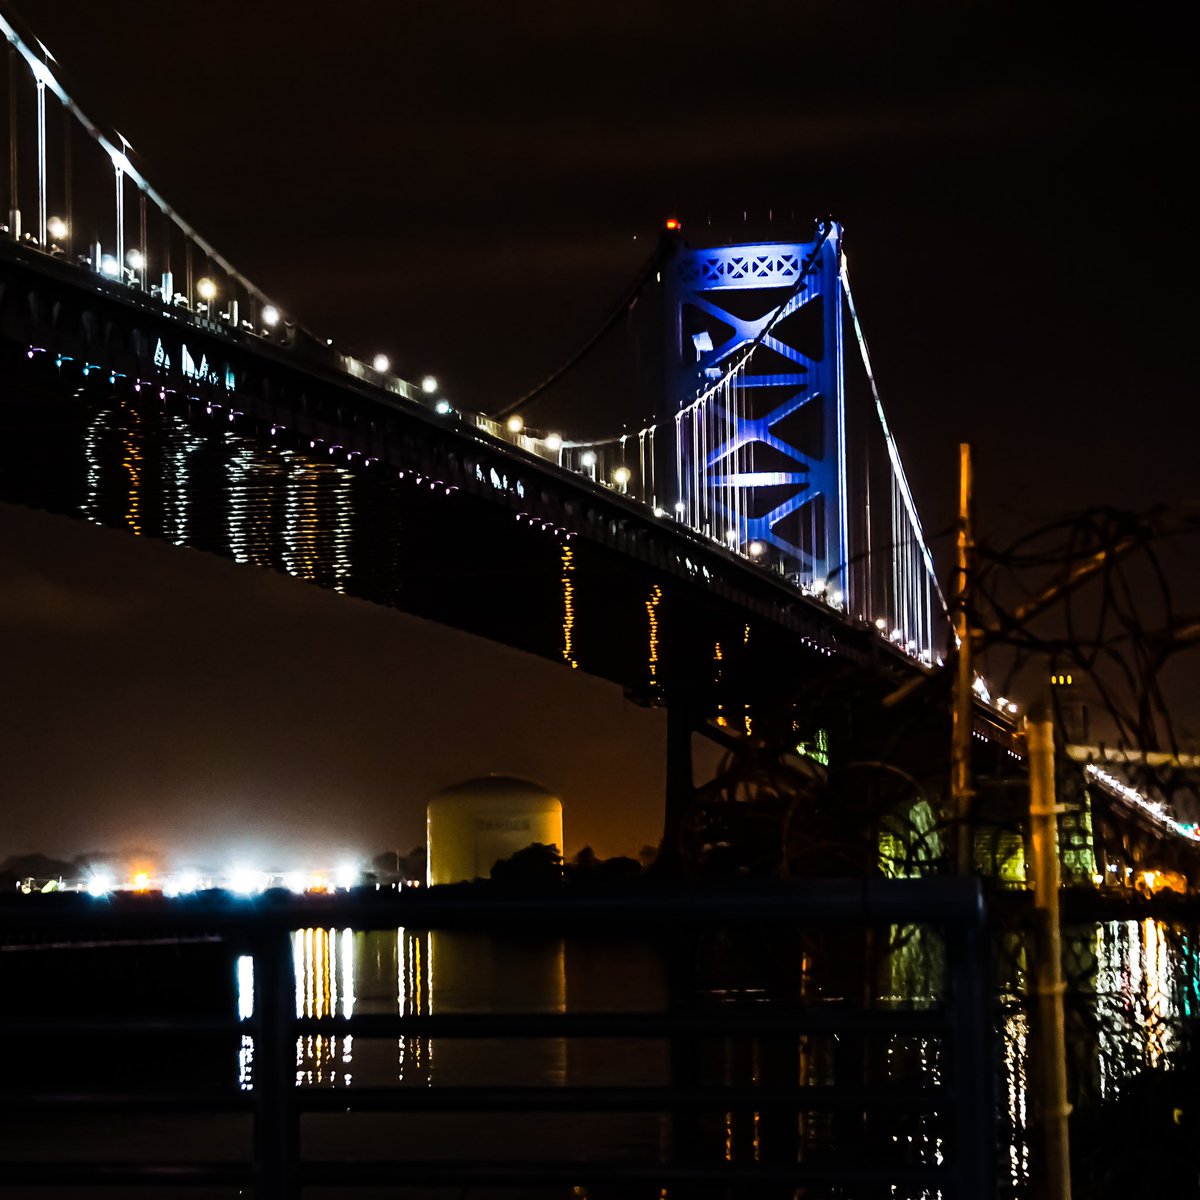 A night at the Benjamin Franklin Bridge #urbanphotography #benjaminfranklinbridge #bridges #bridgesofphilly #cityofphiladelphia #citynights #latenightphillywalks #NightPhotography #phillybridges #PHLphoto #phillystreetphotography